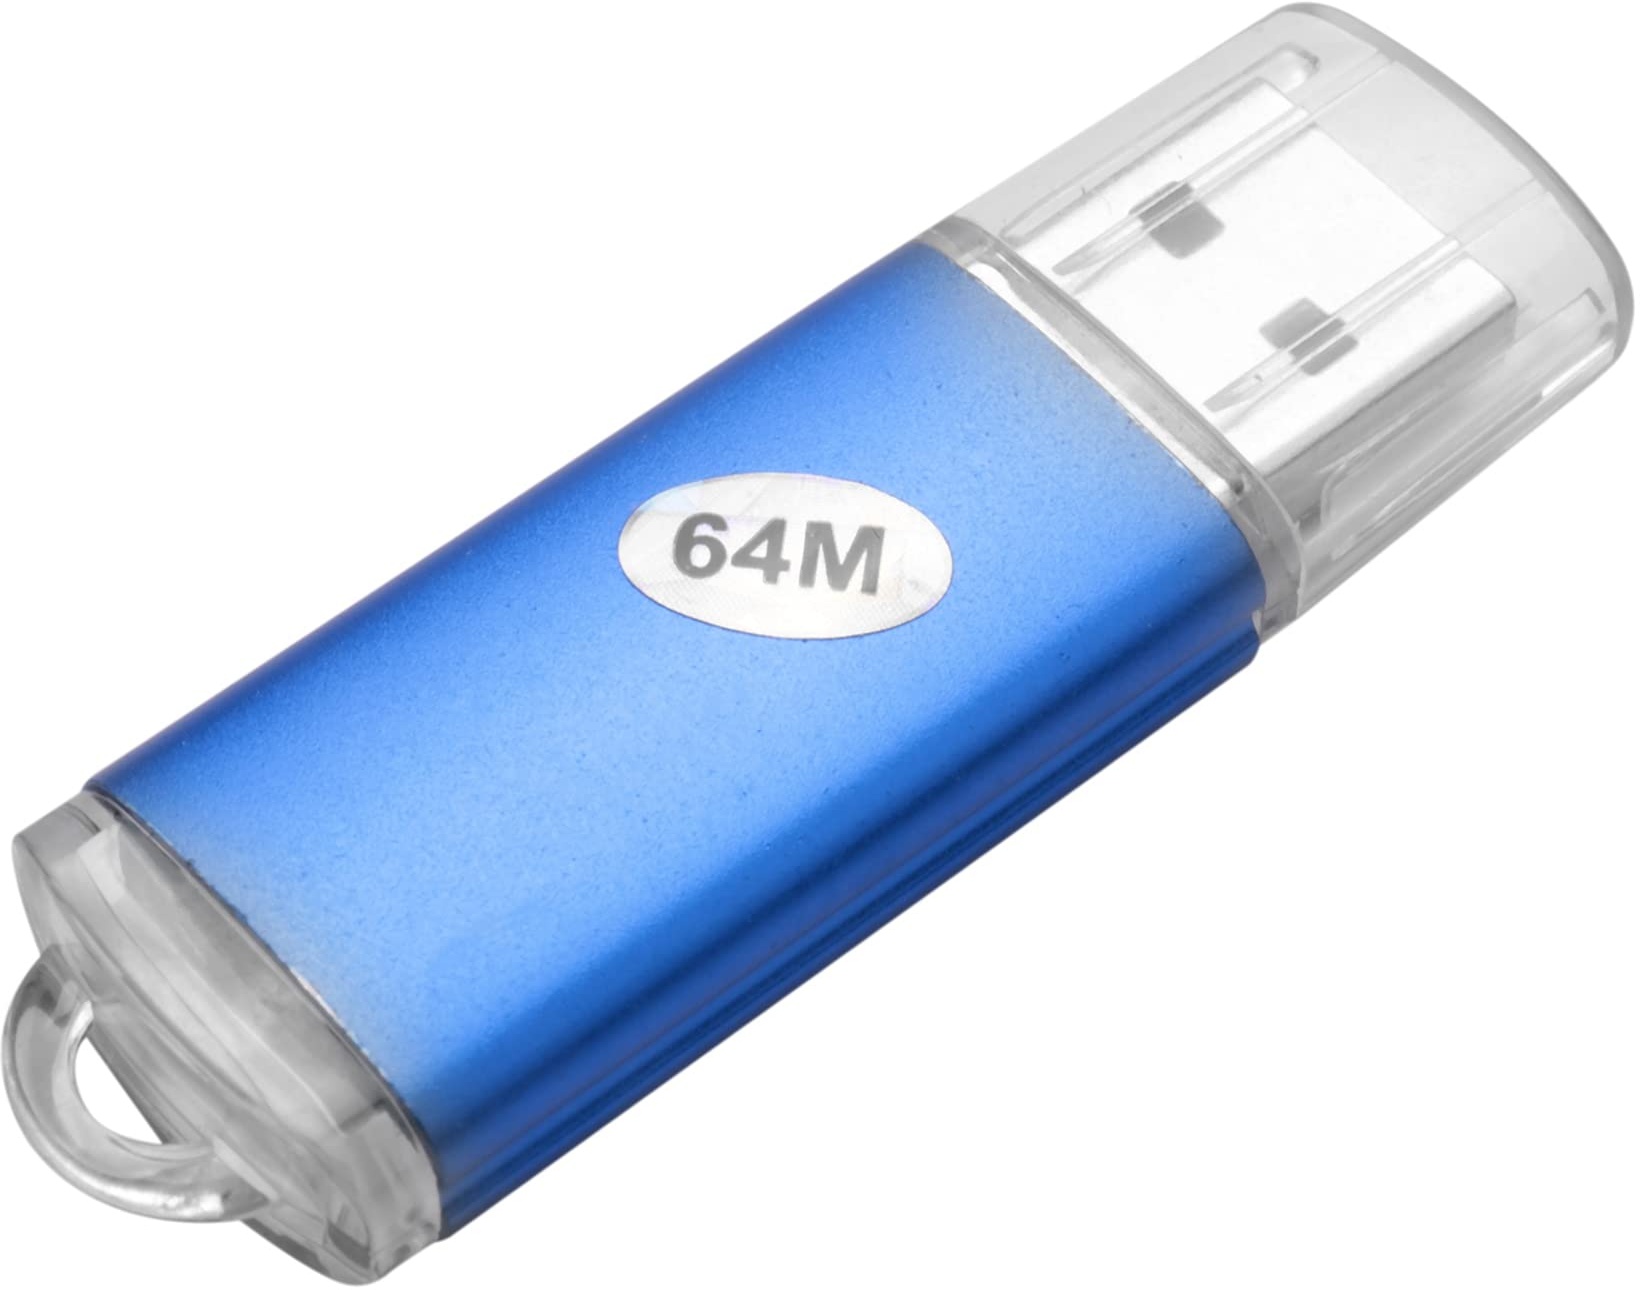 FRGMNT 64 MB USB 2.0 Memory Stick Flash Drive PC Laptop Storage